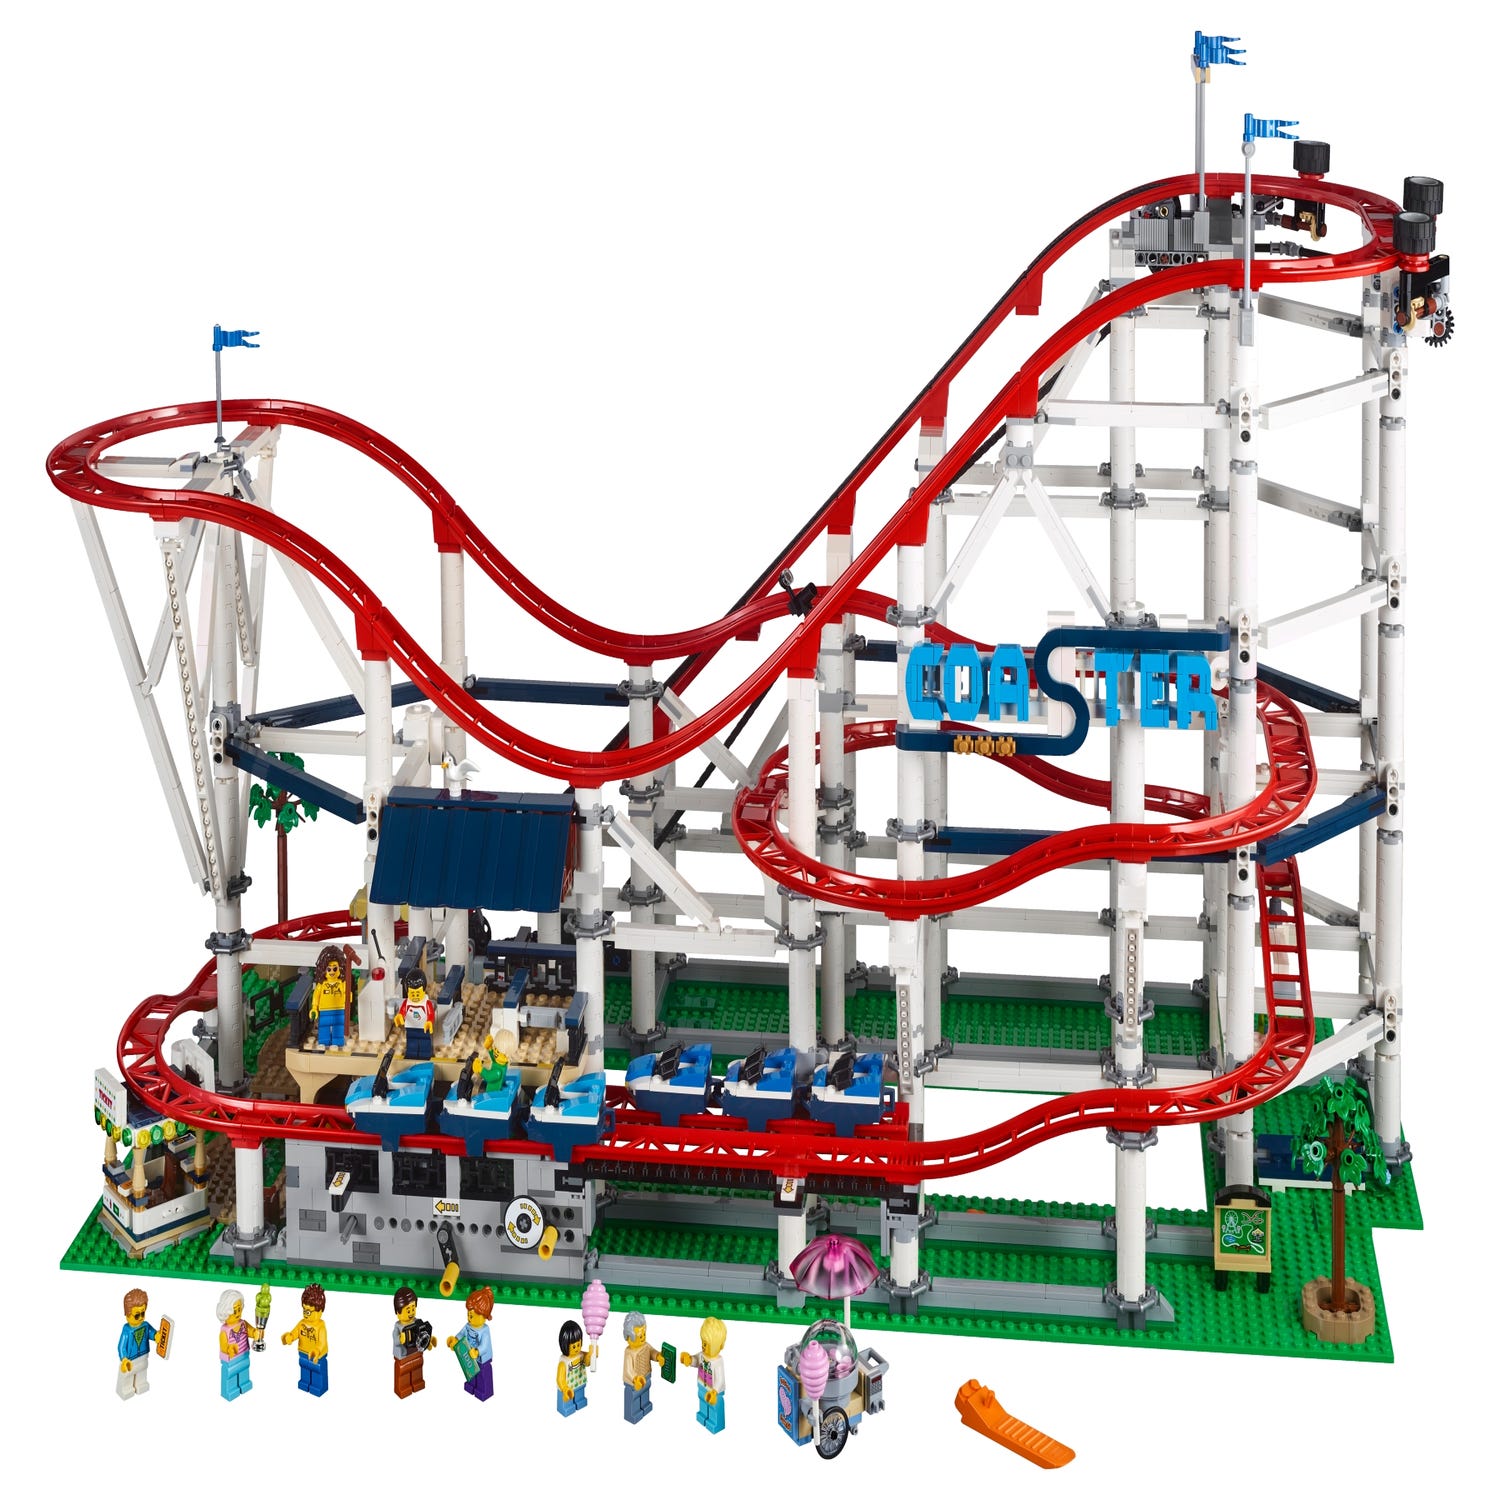 Lego Technic Rollercoaster Sales Shop | www.normanfinkelstein.com